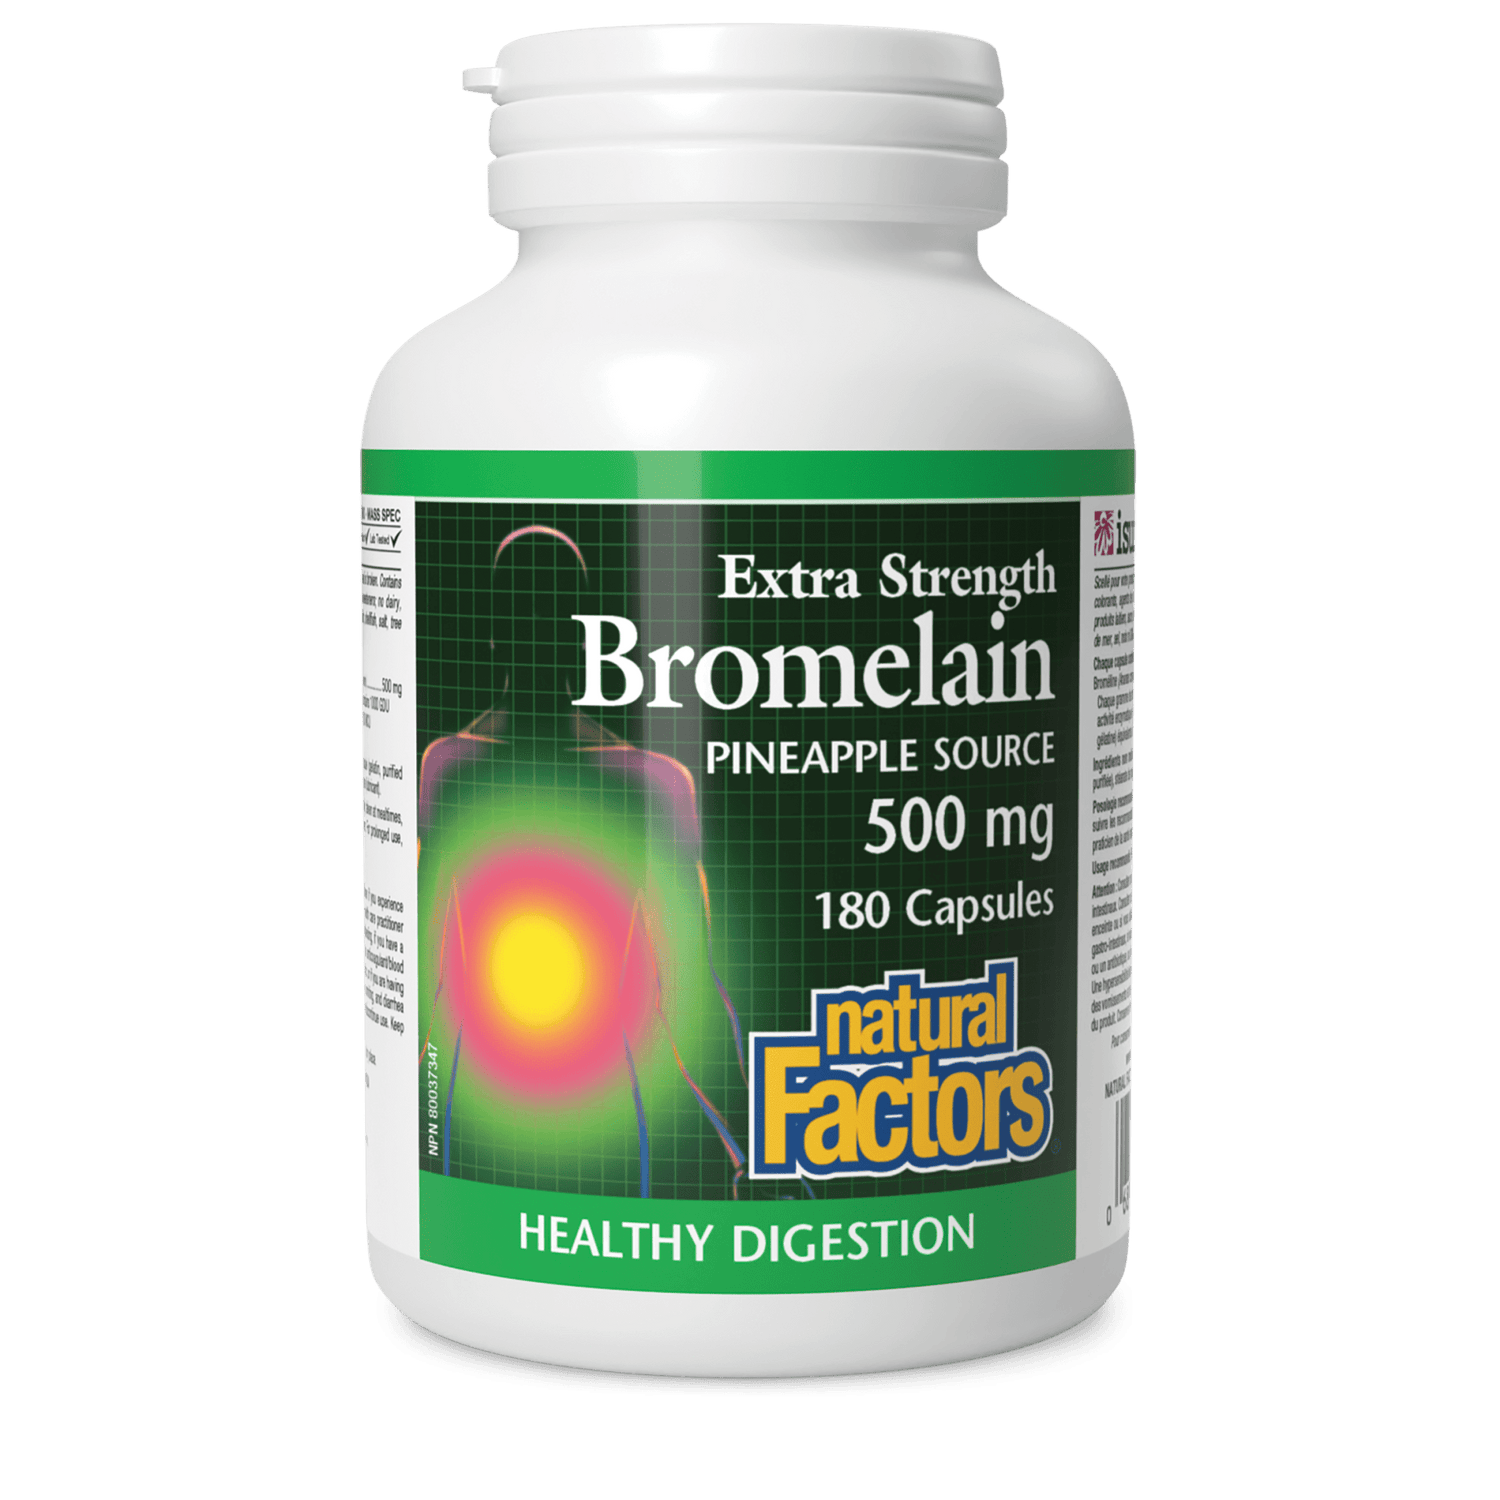 Bromelain Extra Strength 500 mg, Pineapple Source, Natural Factors|v|image|1736